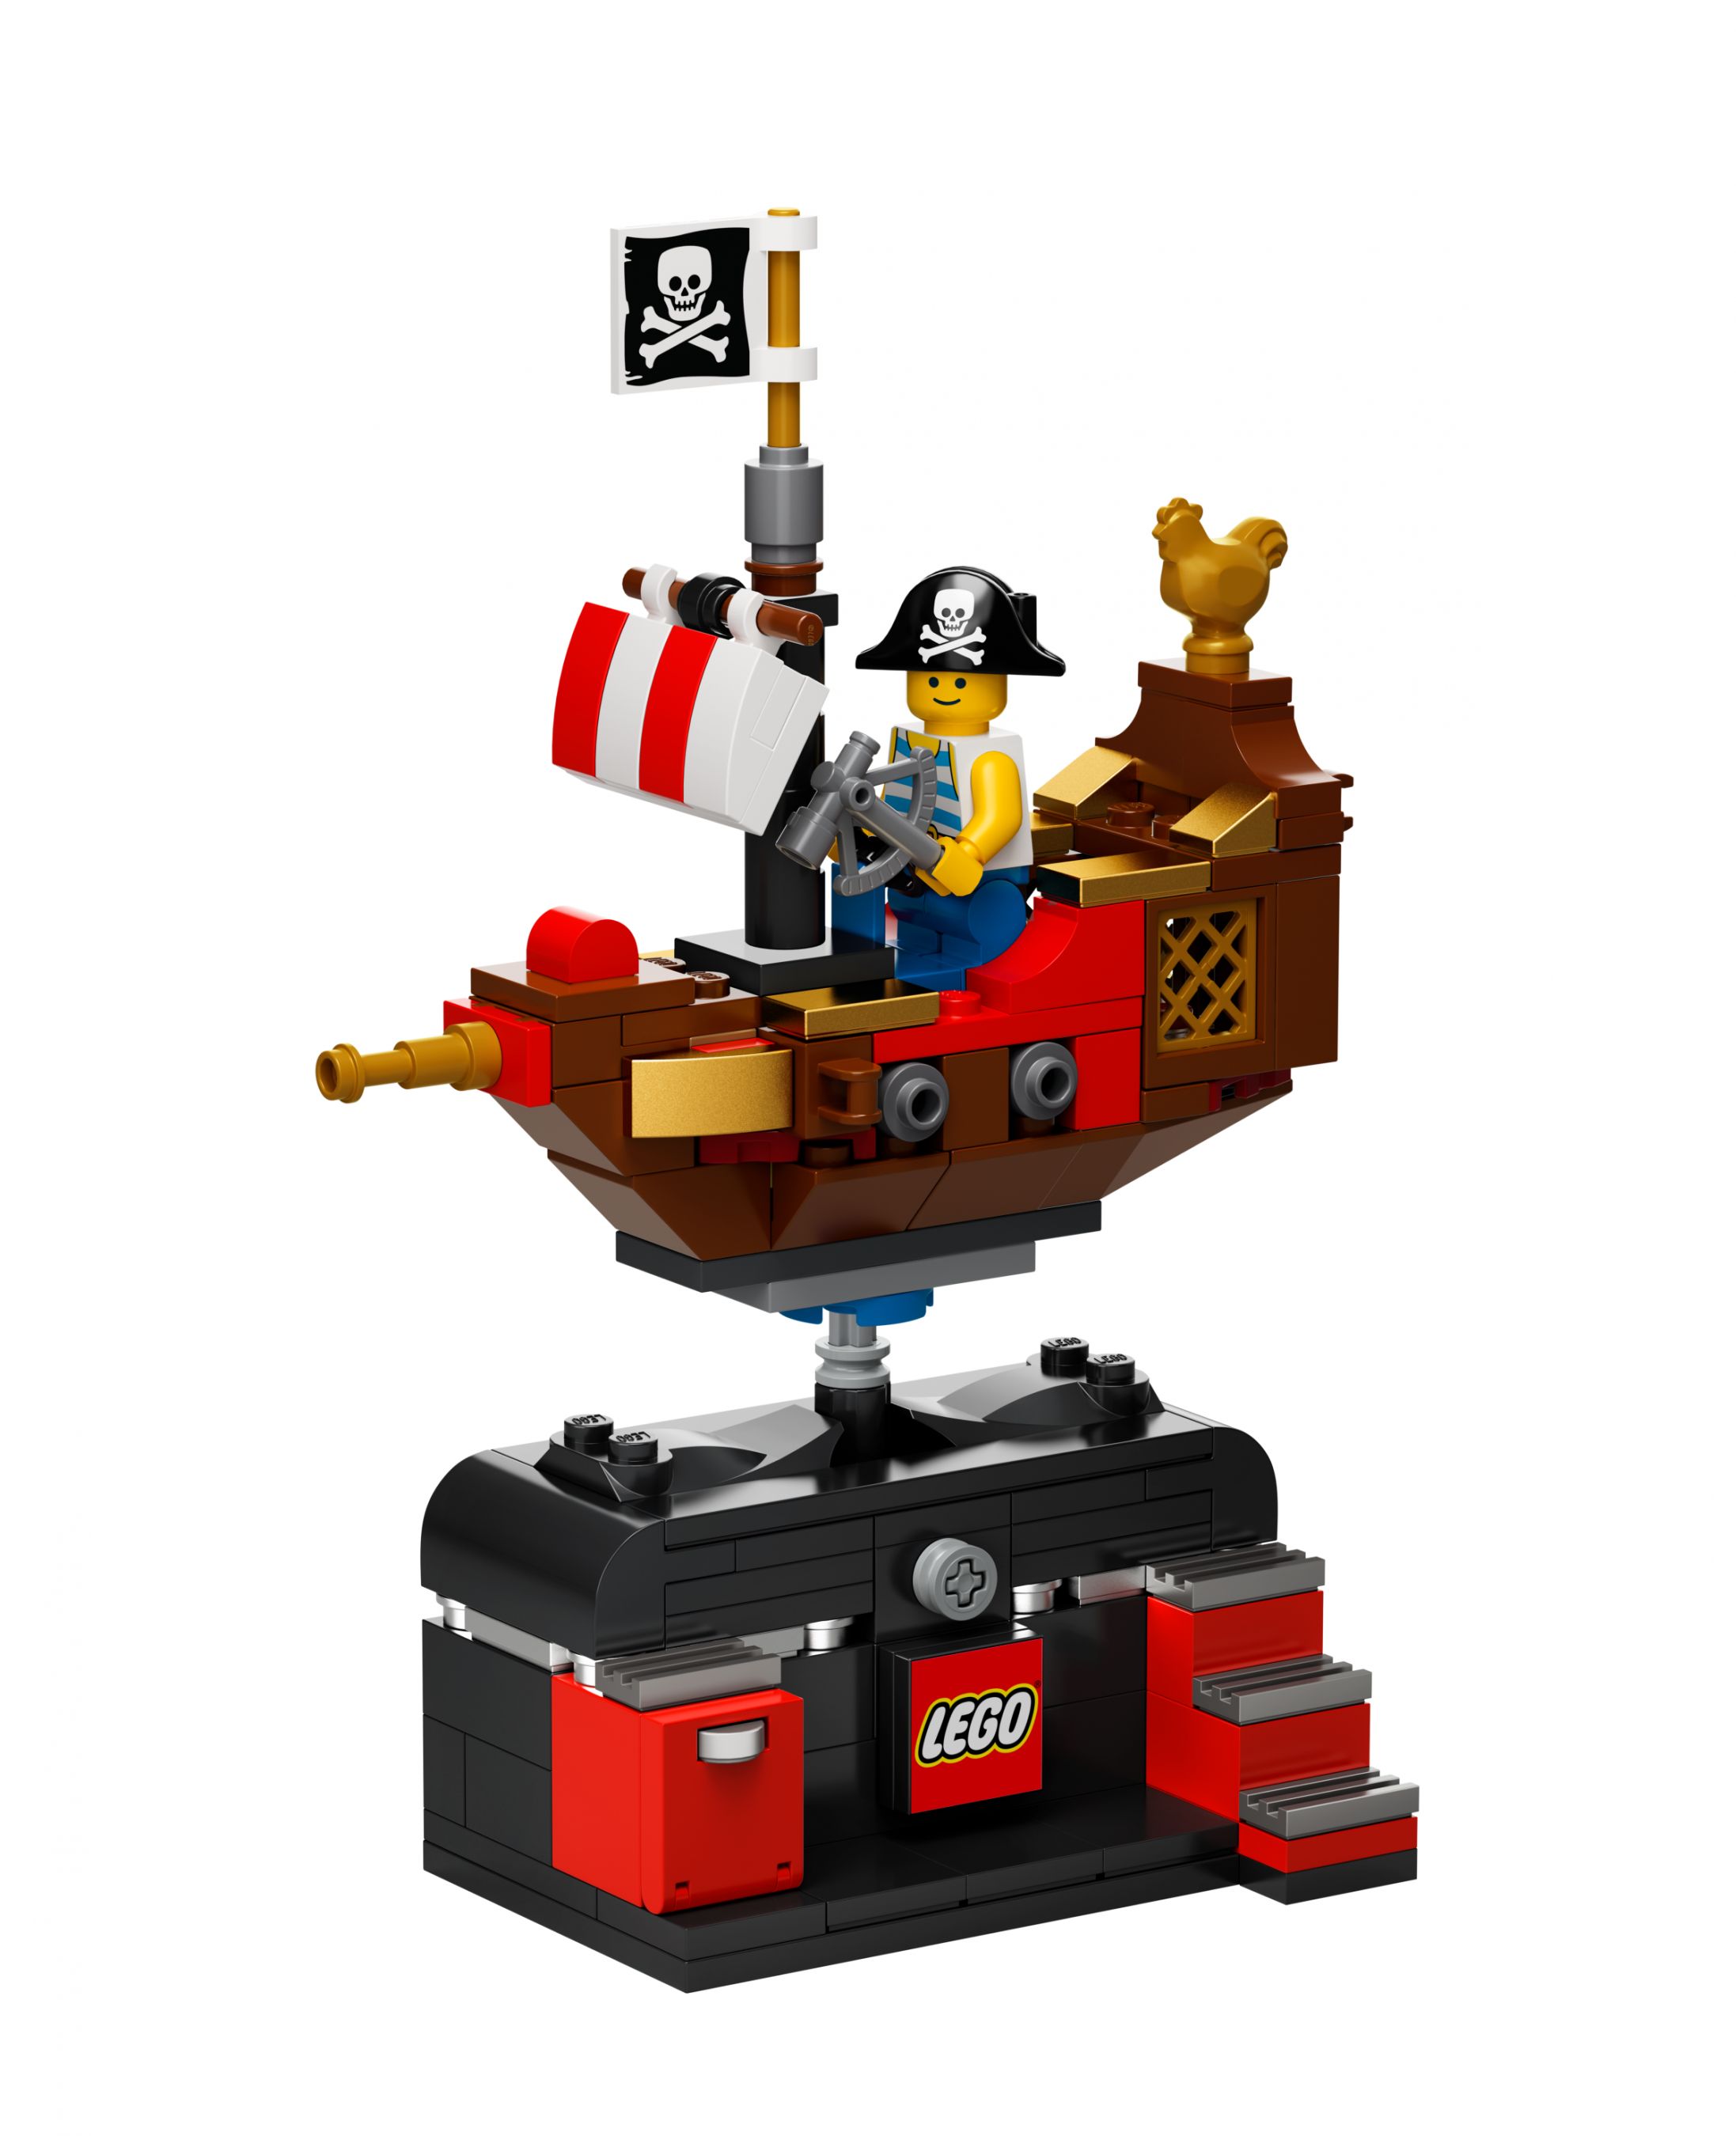 LEGO Promotional 5007427 Pirate Adventure Ride LEGO_5007427_alt1.jpg